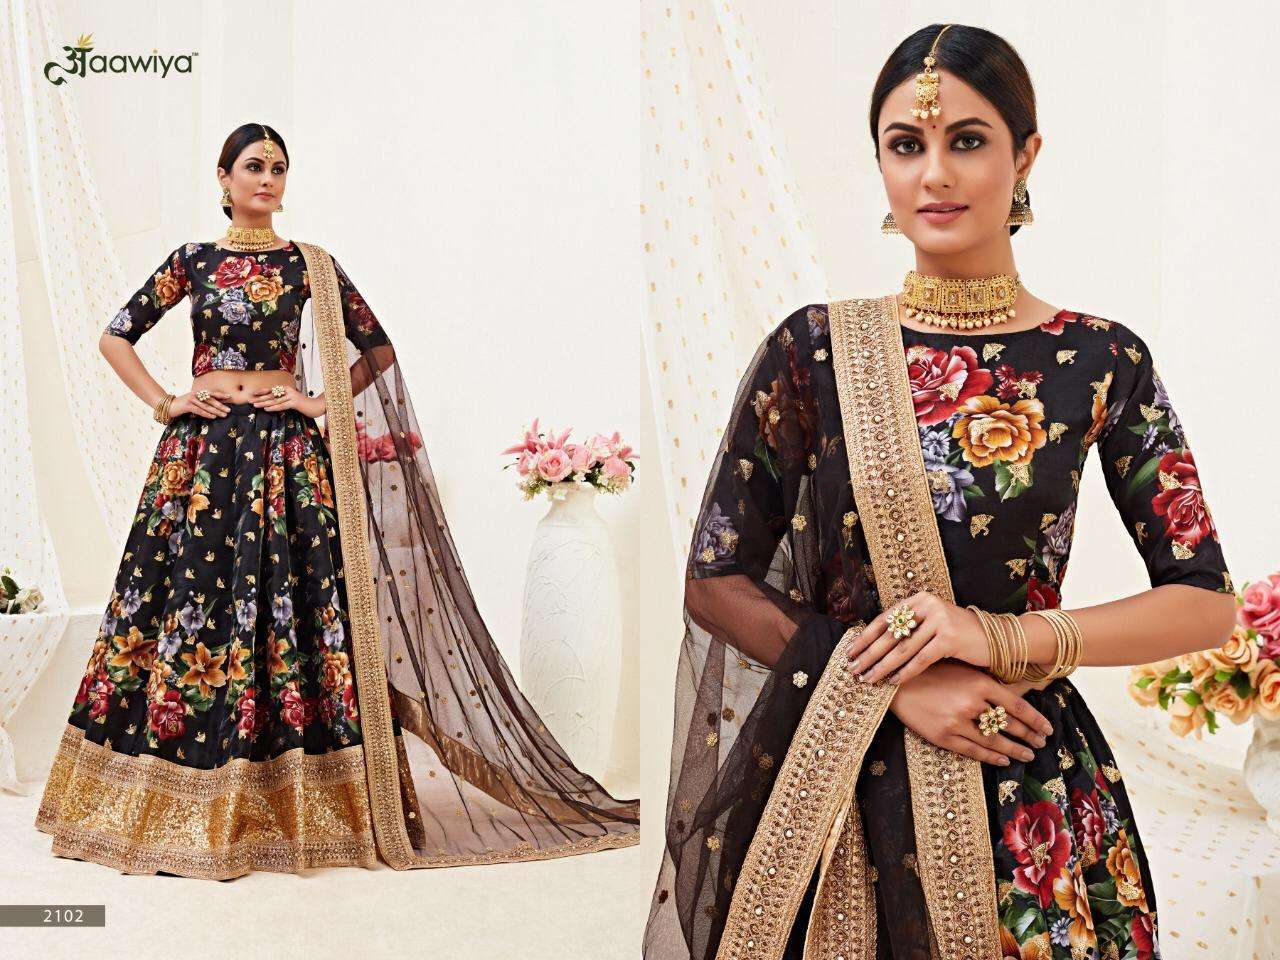 Hiranyam Vol-1 By Aawiya 2101 To 2105 Series Designer Beautiful Navratri Collection Occasional Wear & Party Wear Bangalori Satin Lehengas At Wholesale Price